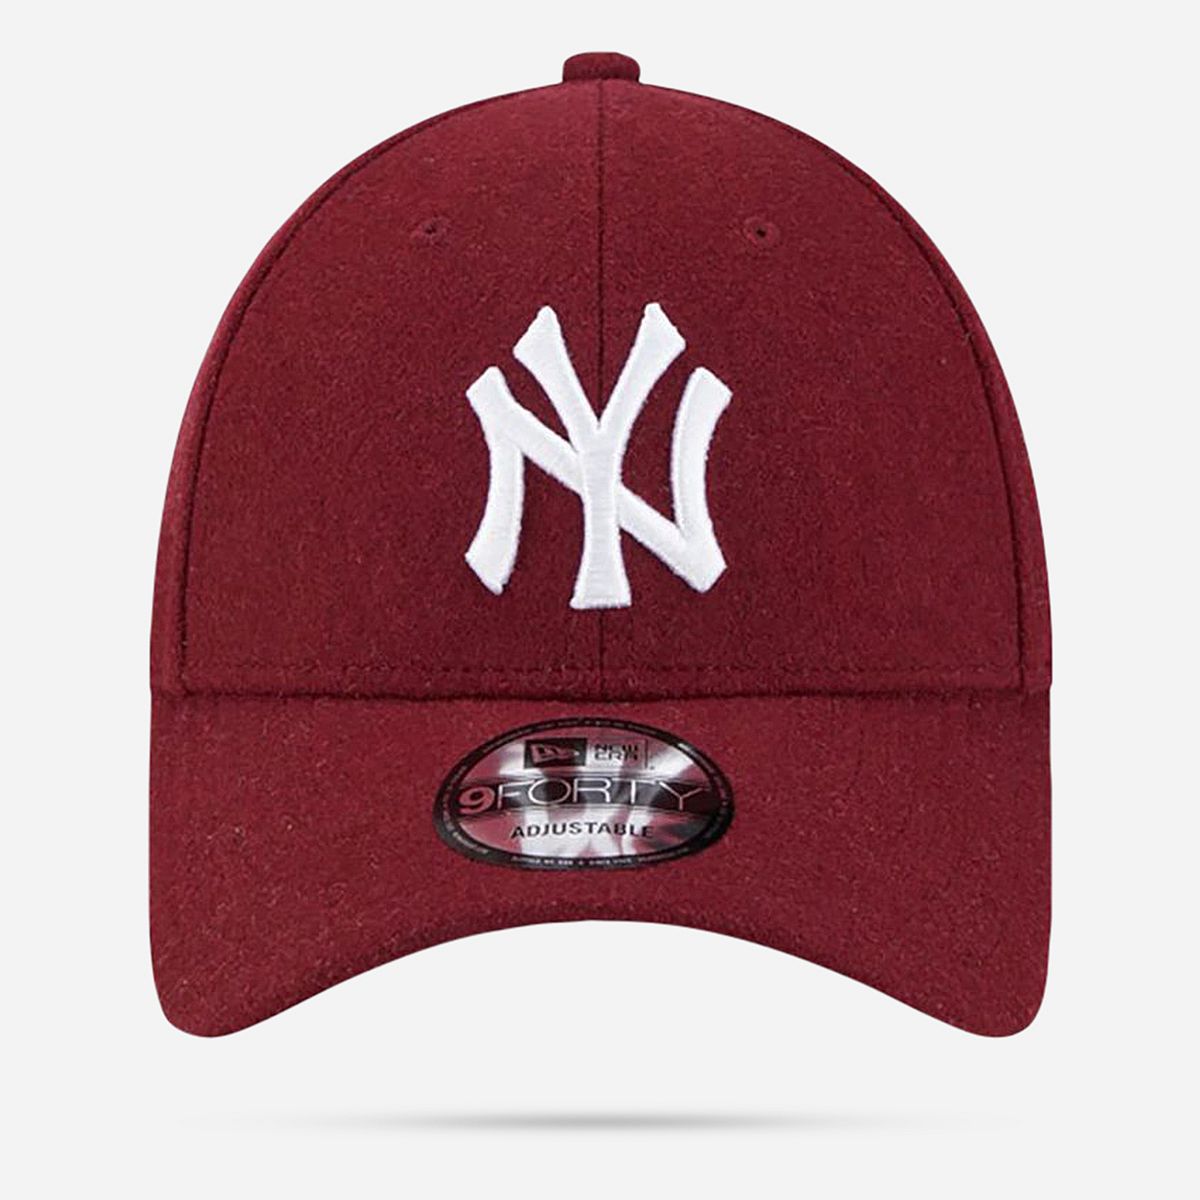 AN305071 New York Yankees Cap